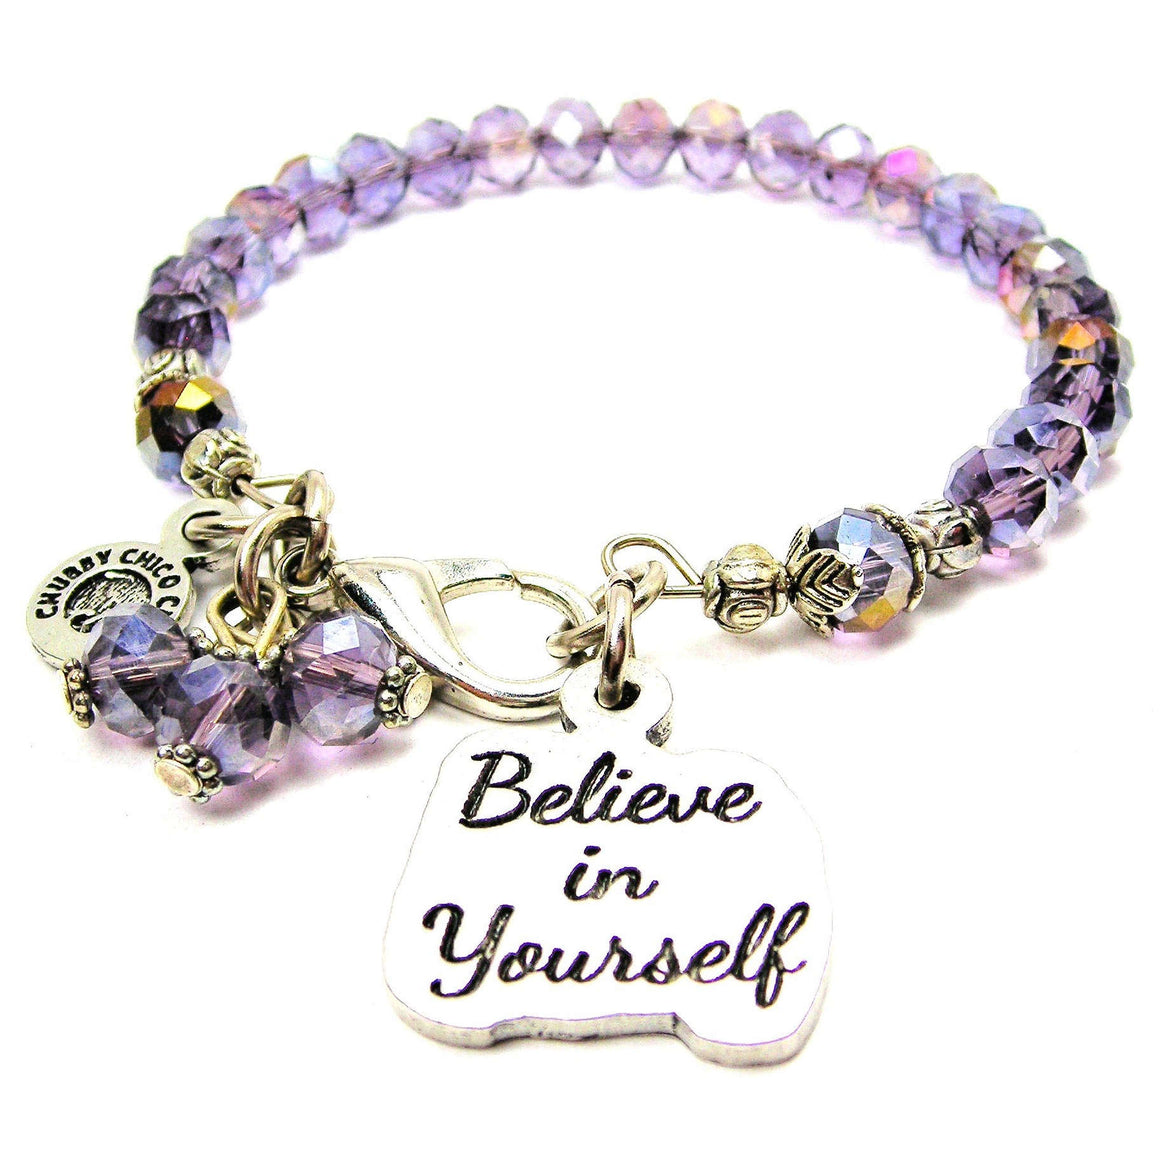 Inspirational Bracelet - Believe in Yourself